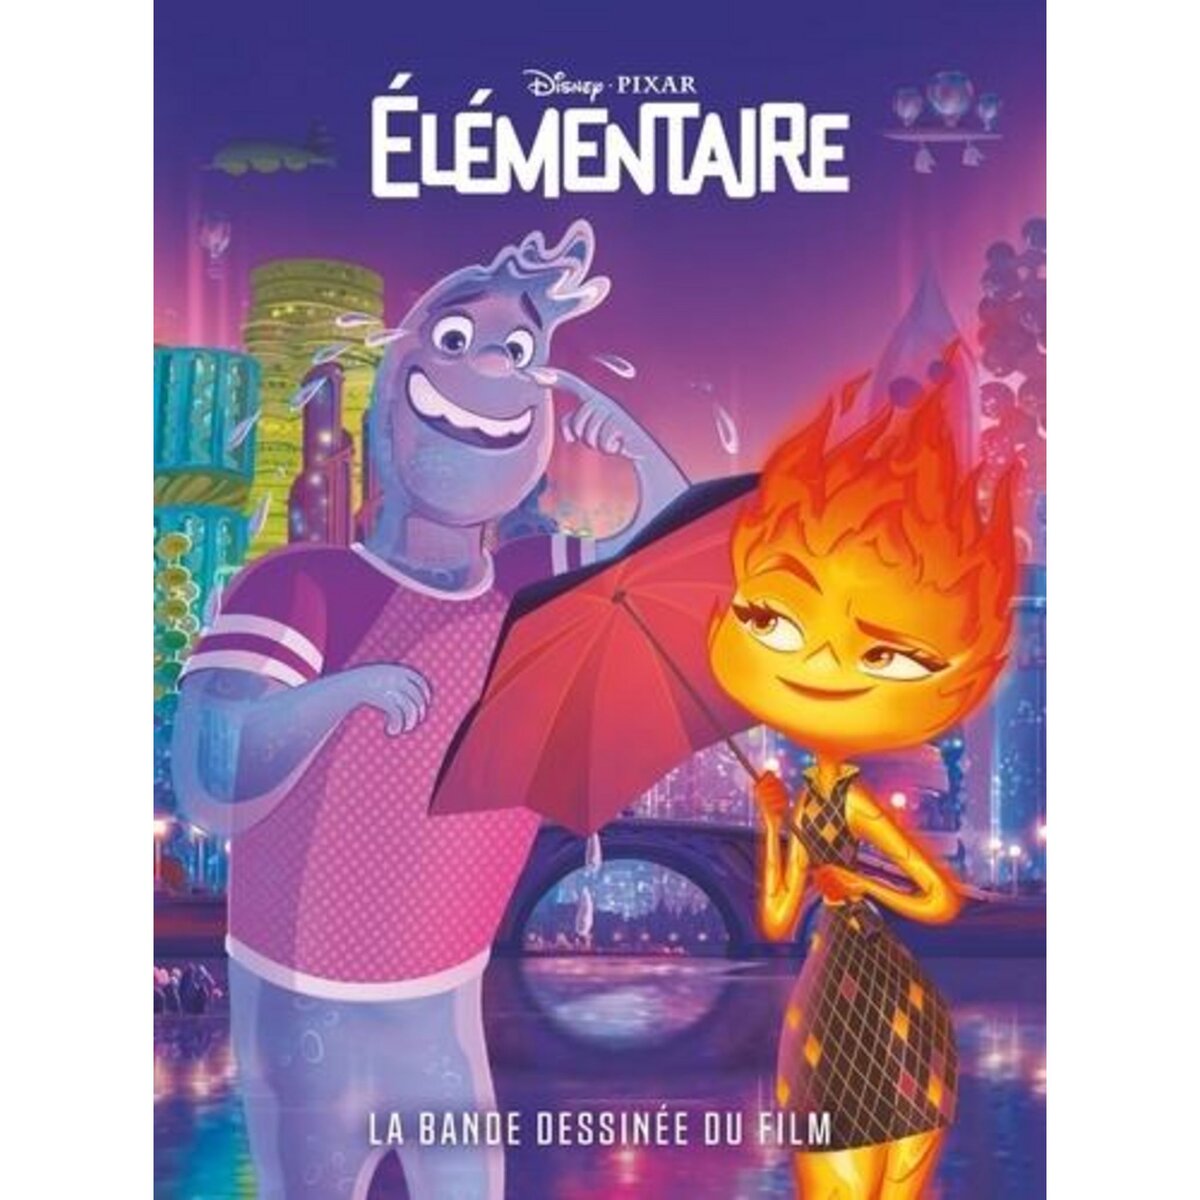  ELEMENTAIRE. LA BANDE DESSINEE DU FILM, Disney Pixar